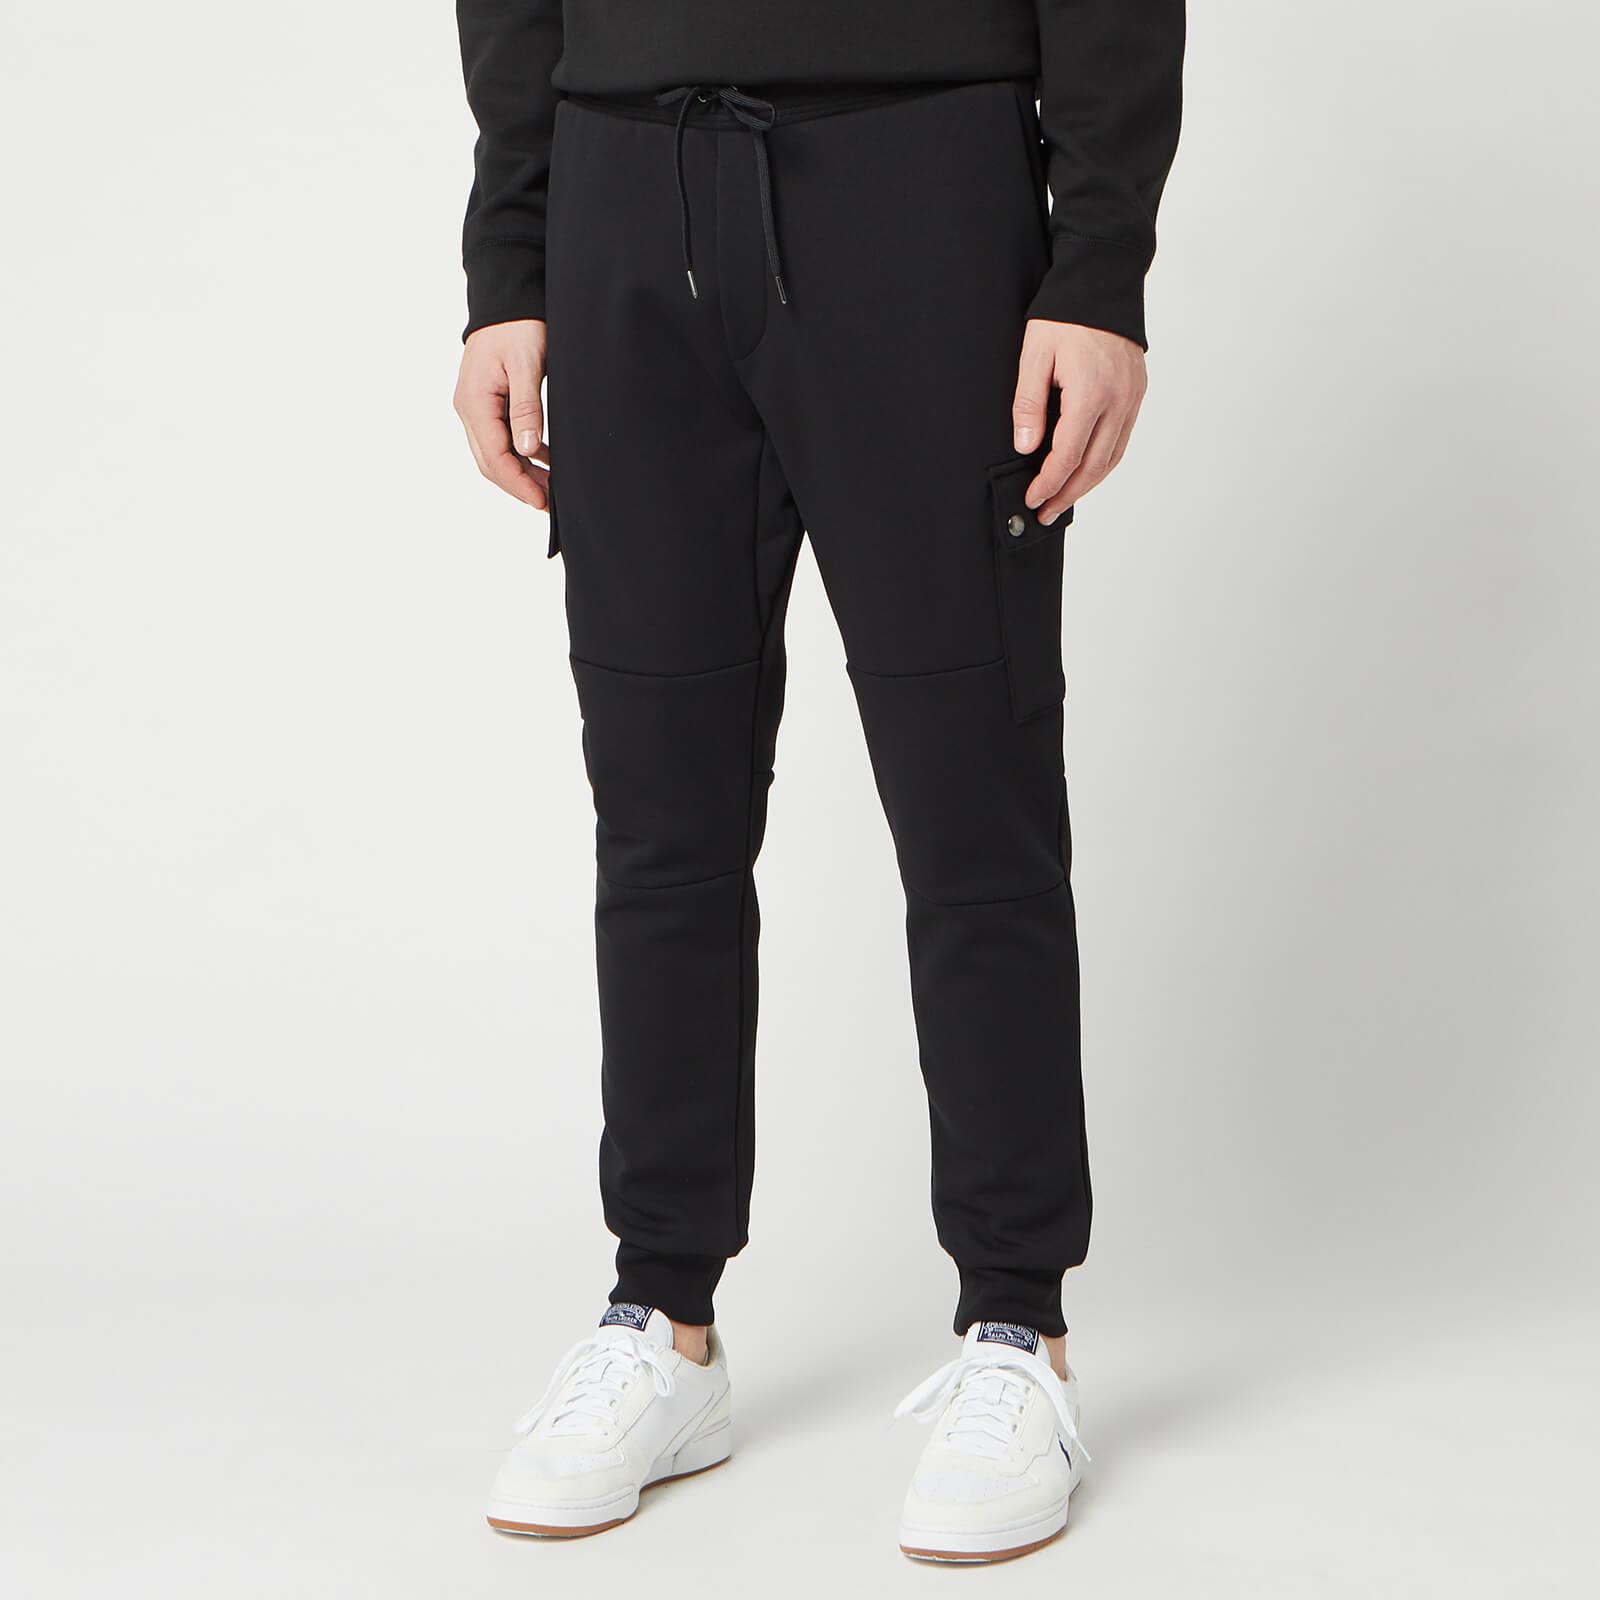 Polo Ralph Lauren double knit cargo sweatpants in black